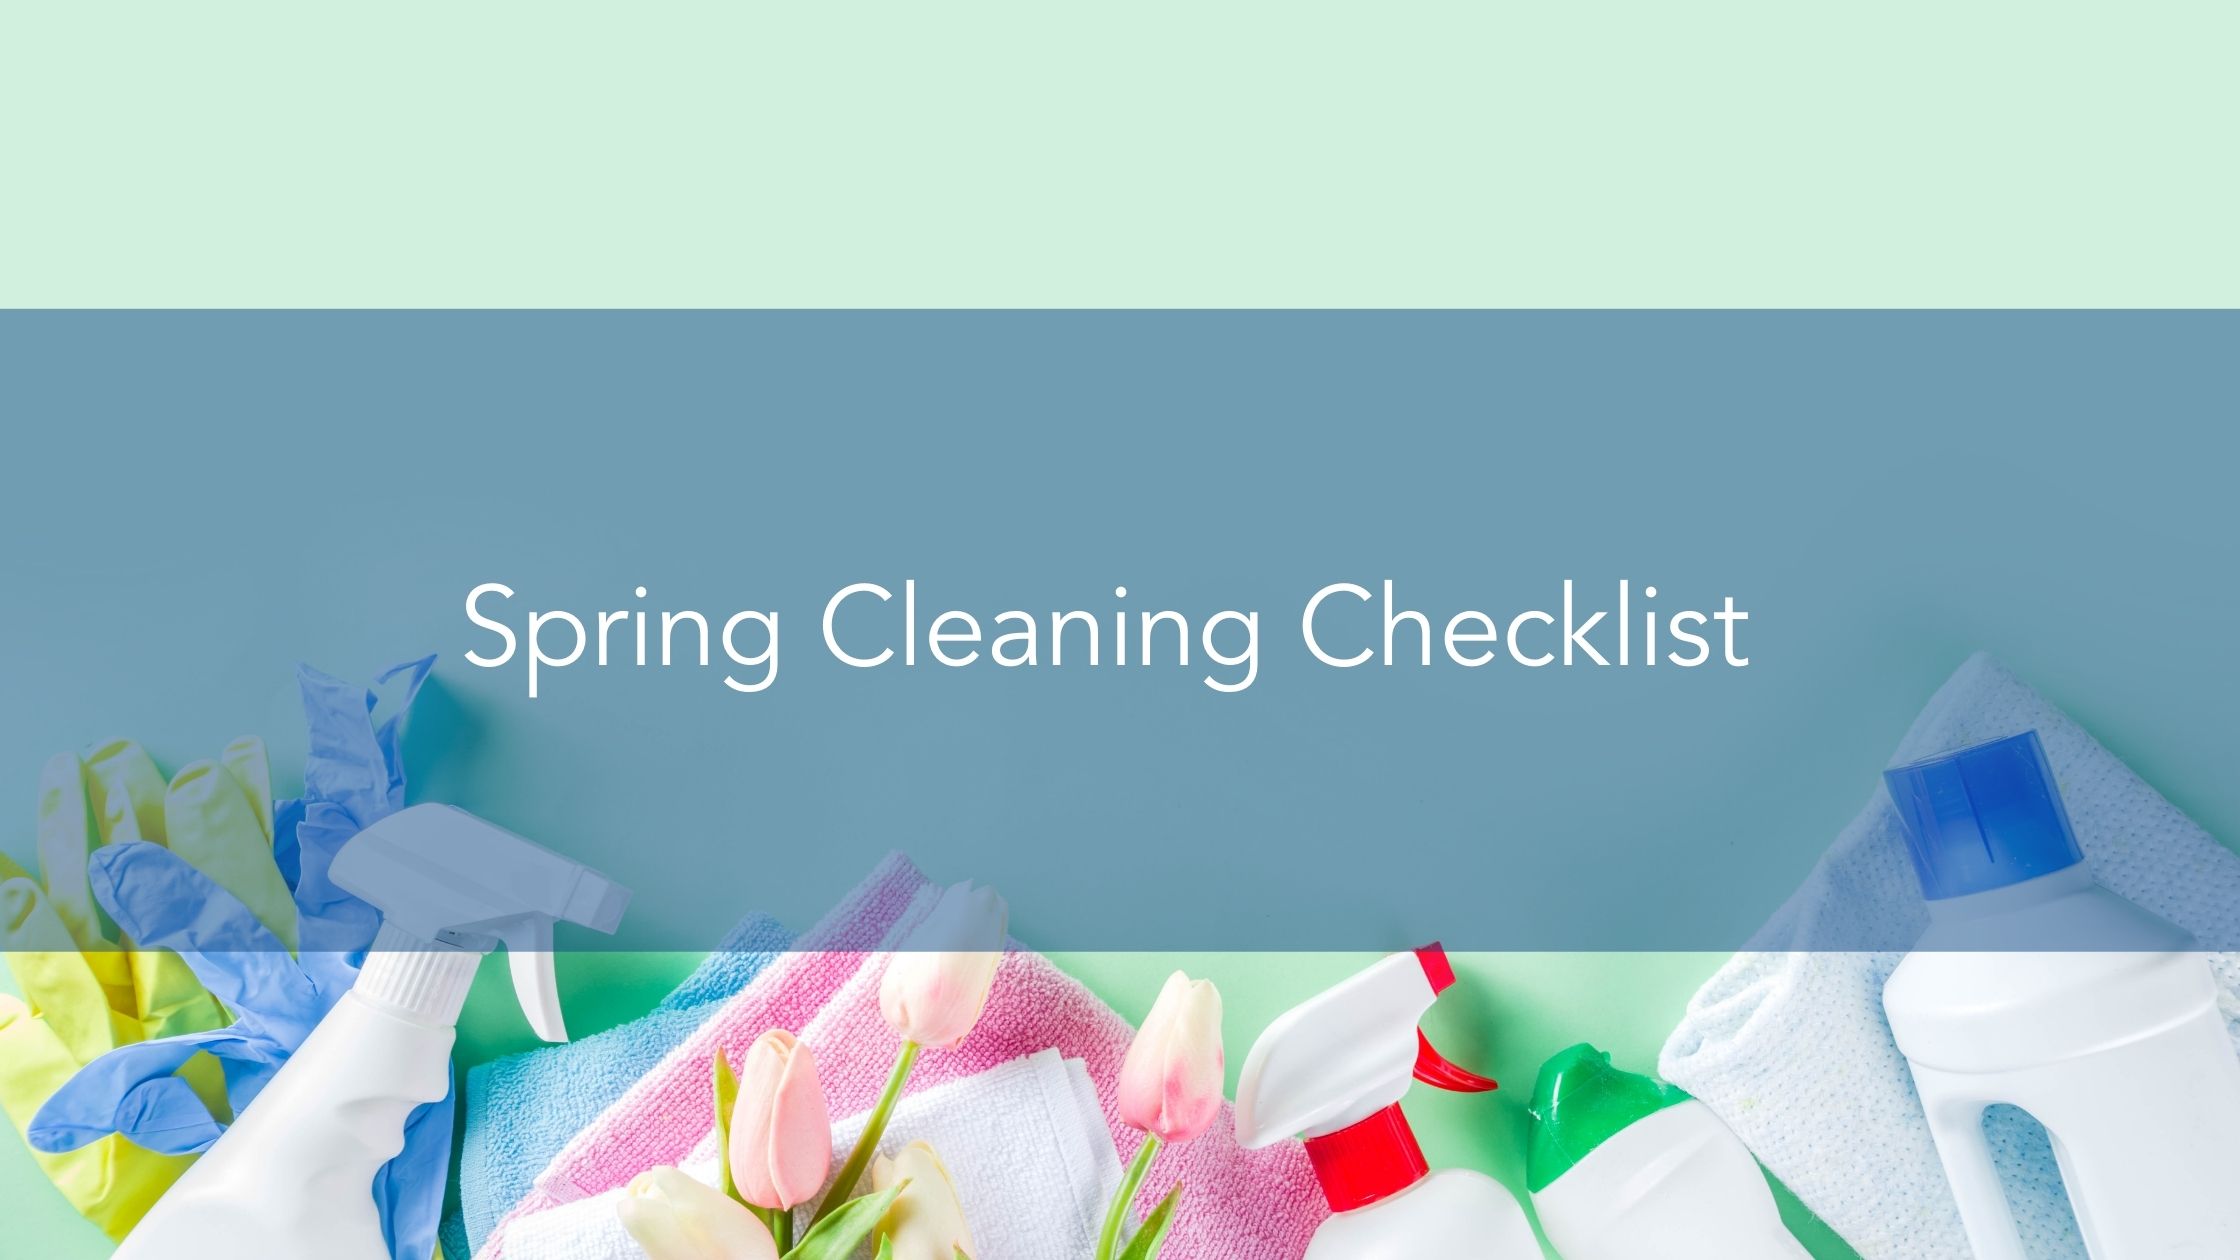 https://handymanconnection.com/wp-content/uploads/2022/04/Spring-Cleaning-Checklist.jpg